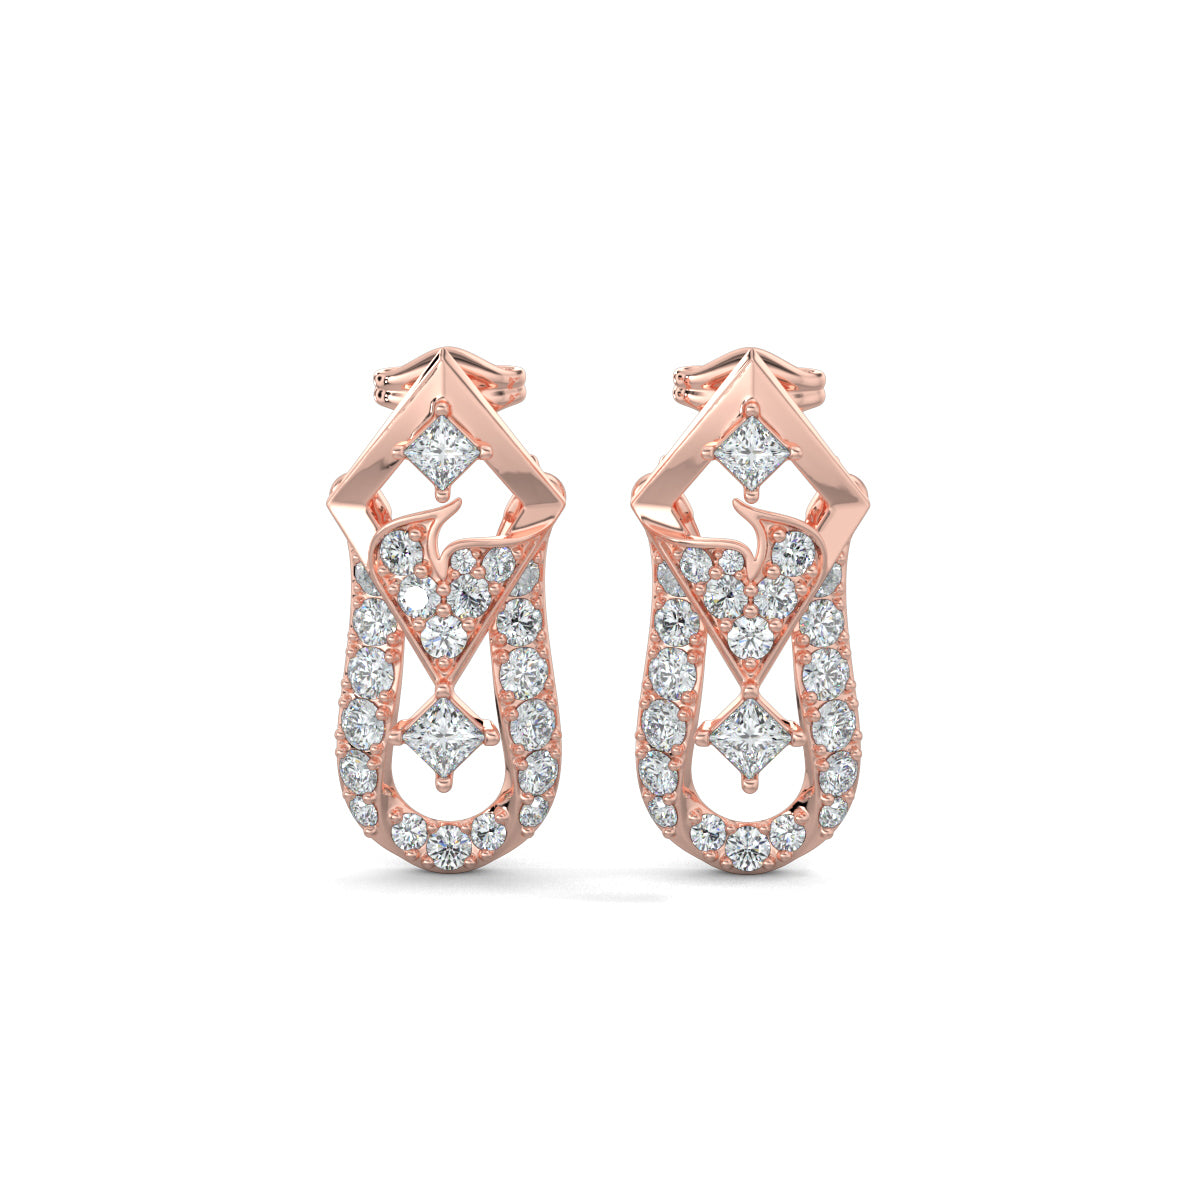 Rose Gold, Diamond Earrings,Art Deco-inspired diamond earrings, mid-length earrings, Natural diamonds, lab-grown diamonds, vintage earrings, glamorous jewelry